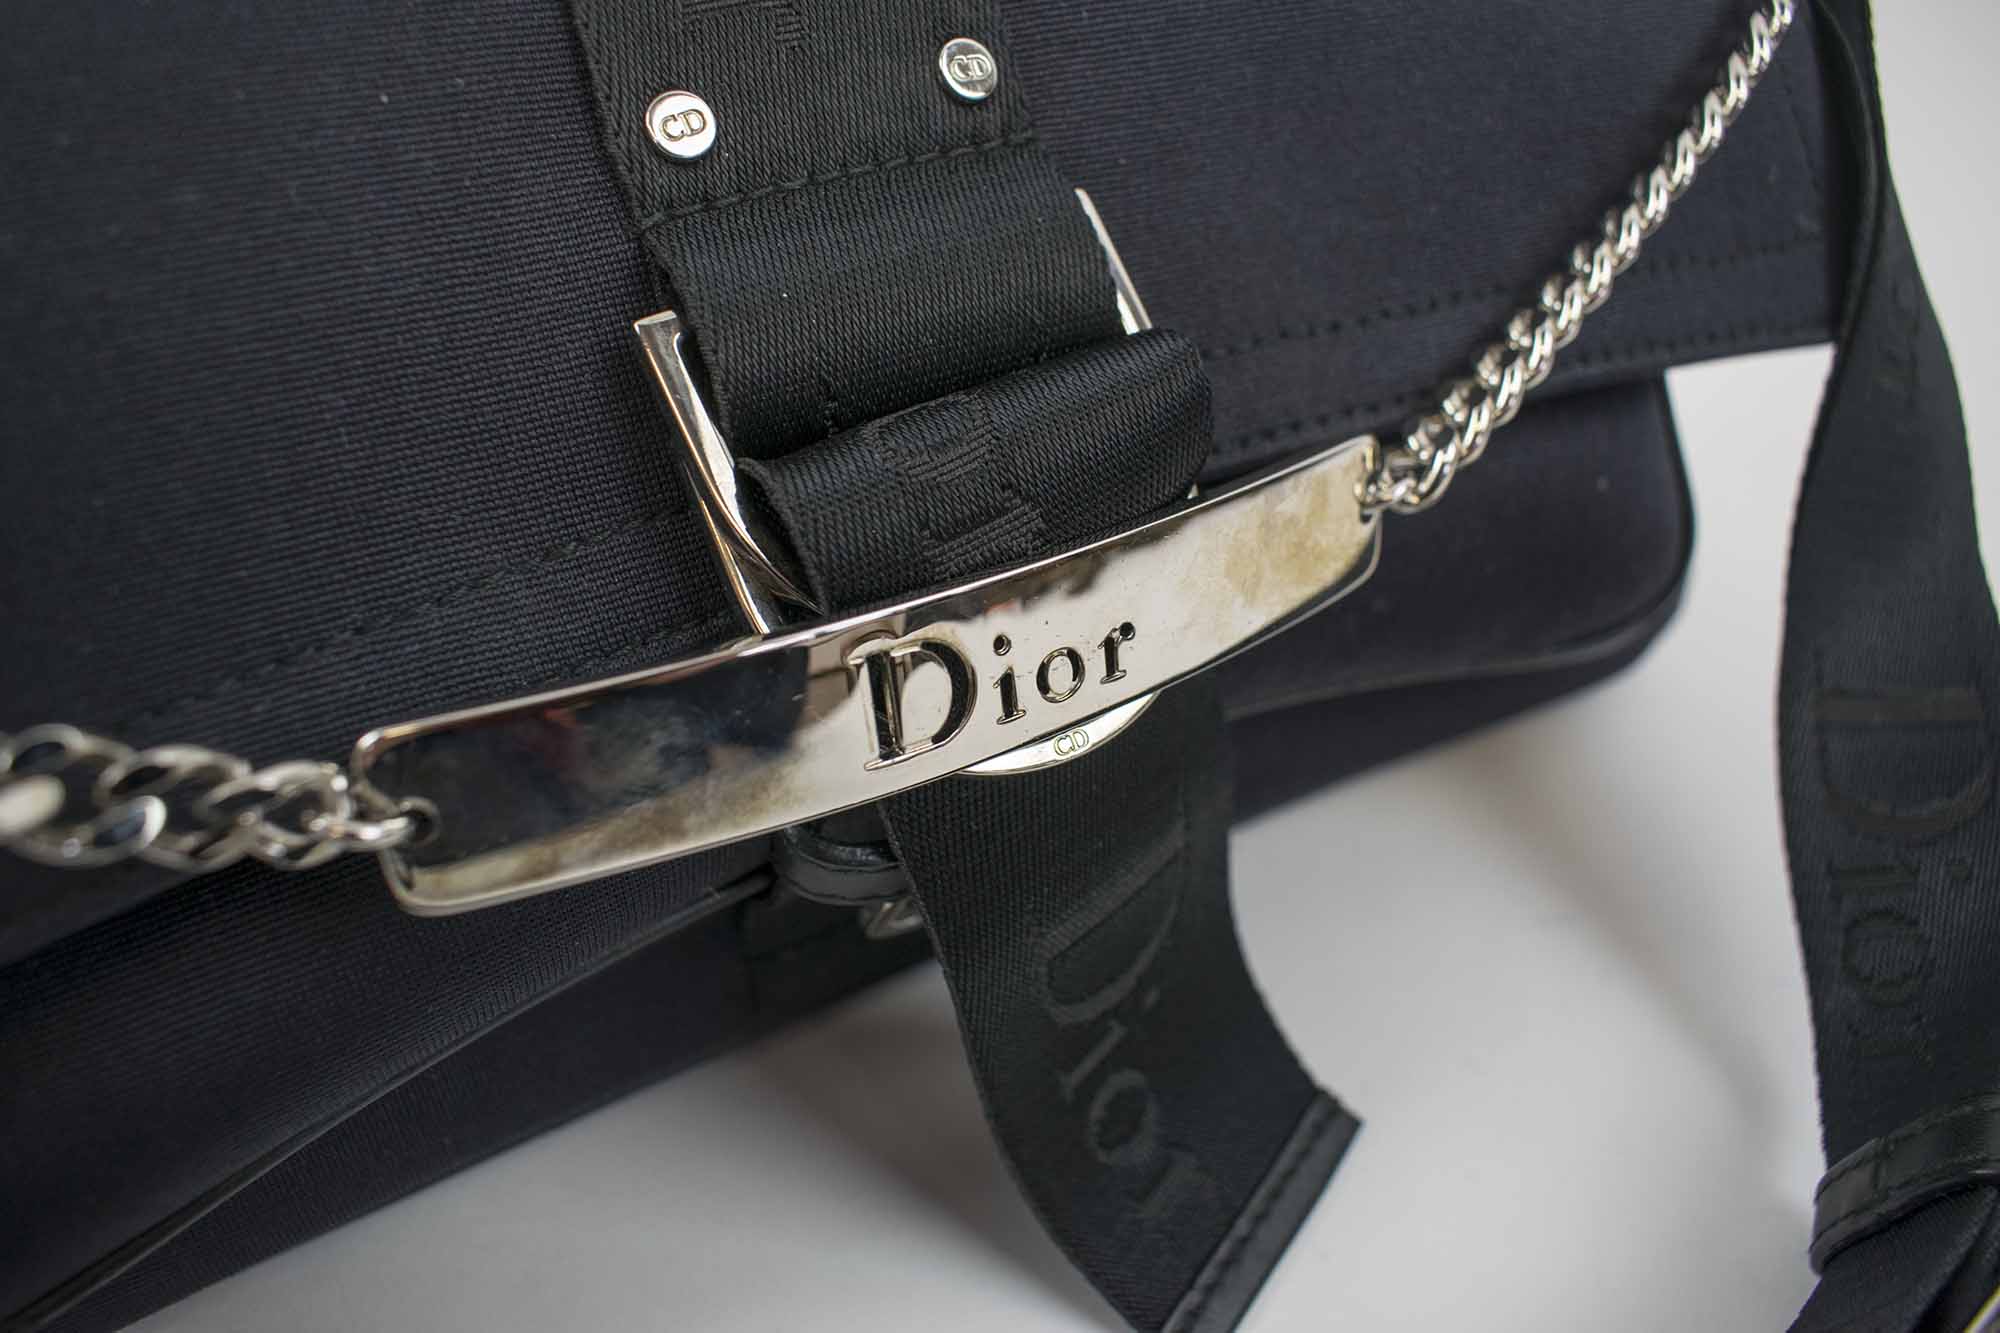  on Twitter  Dior saddle bag Bags Dior bag